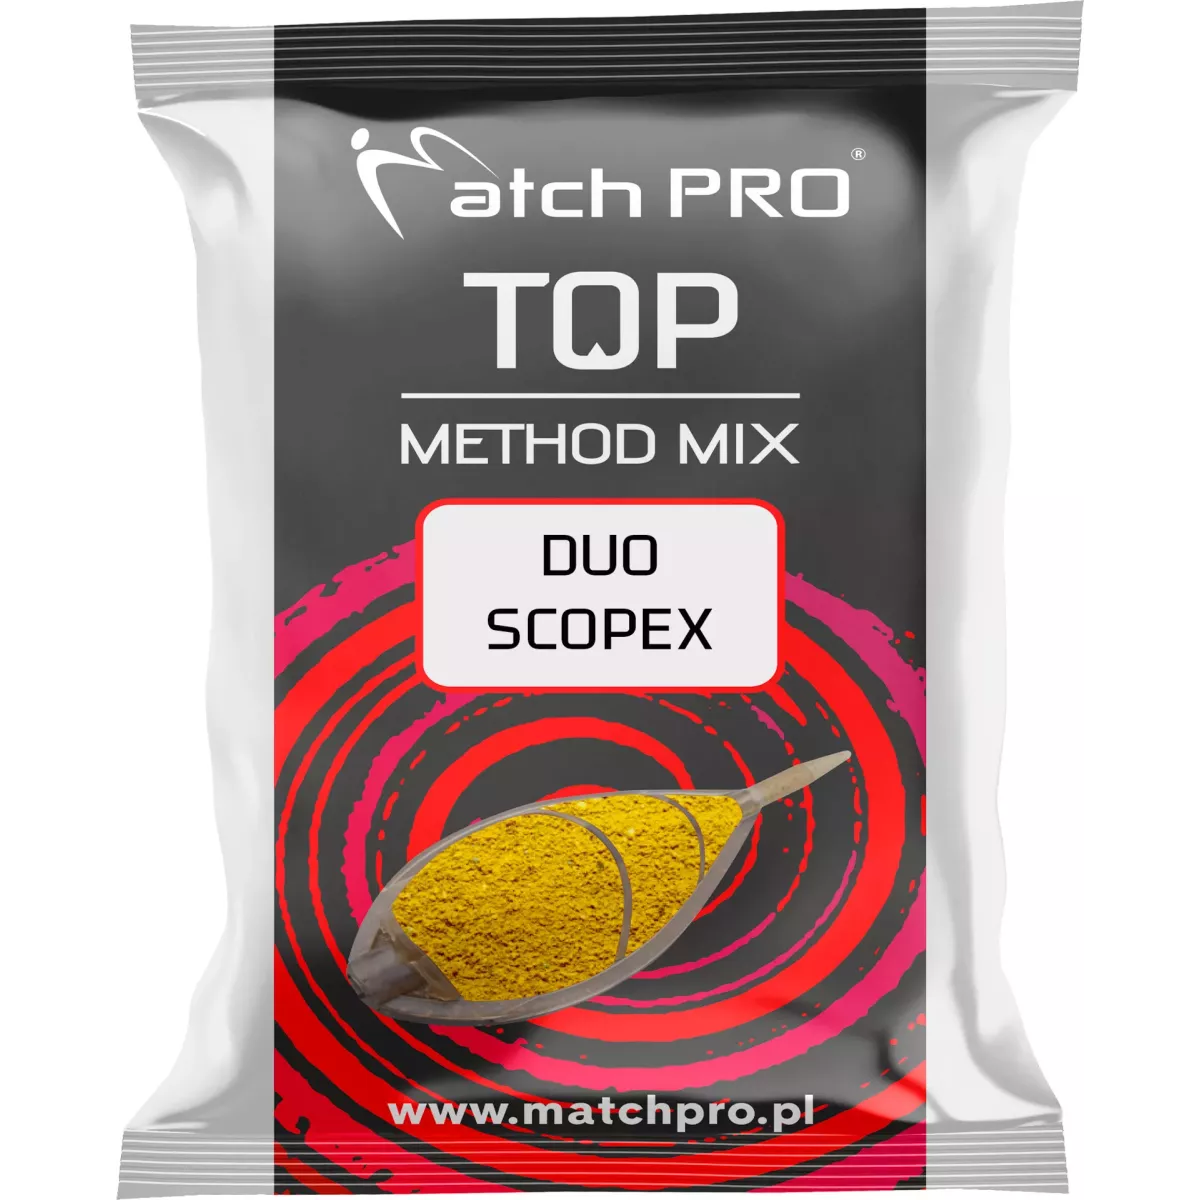 Zanęta MatchPro Method Mix TOP 700g - DUO SCOPEX